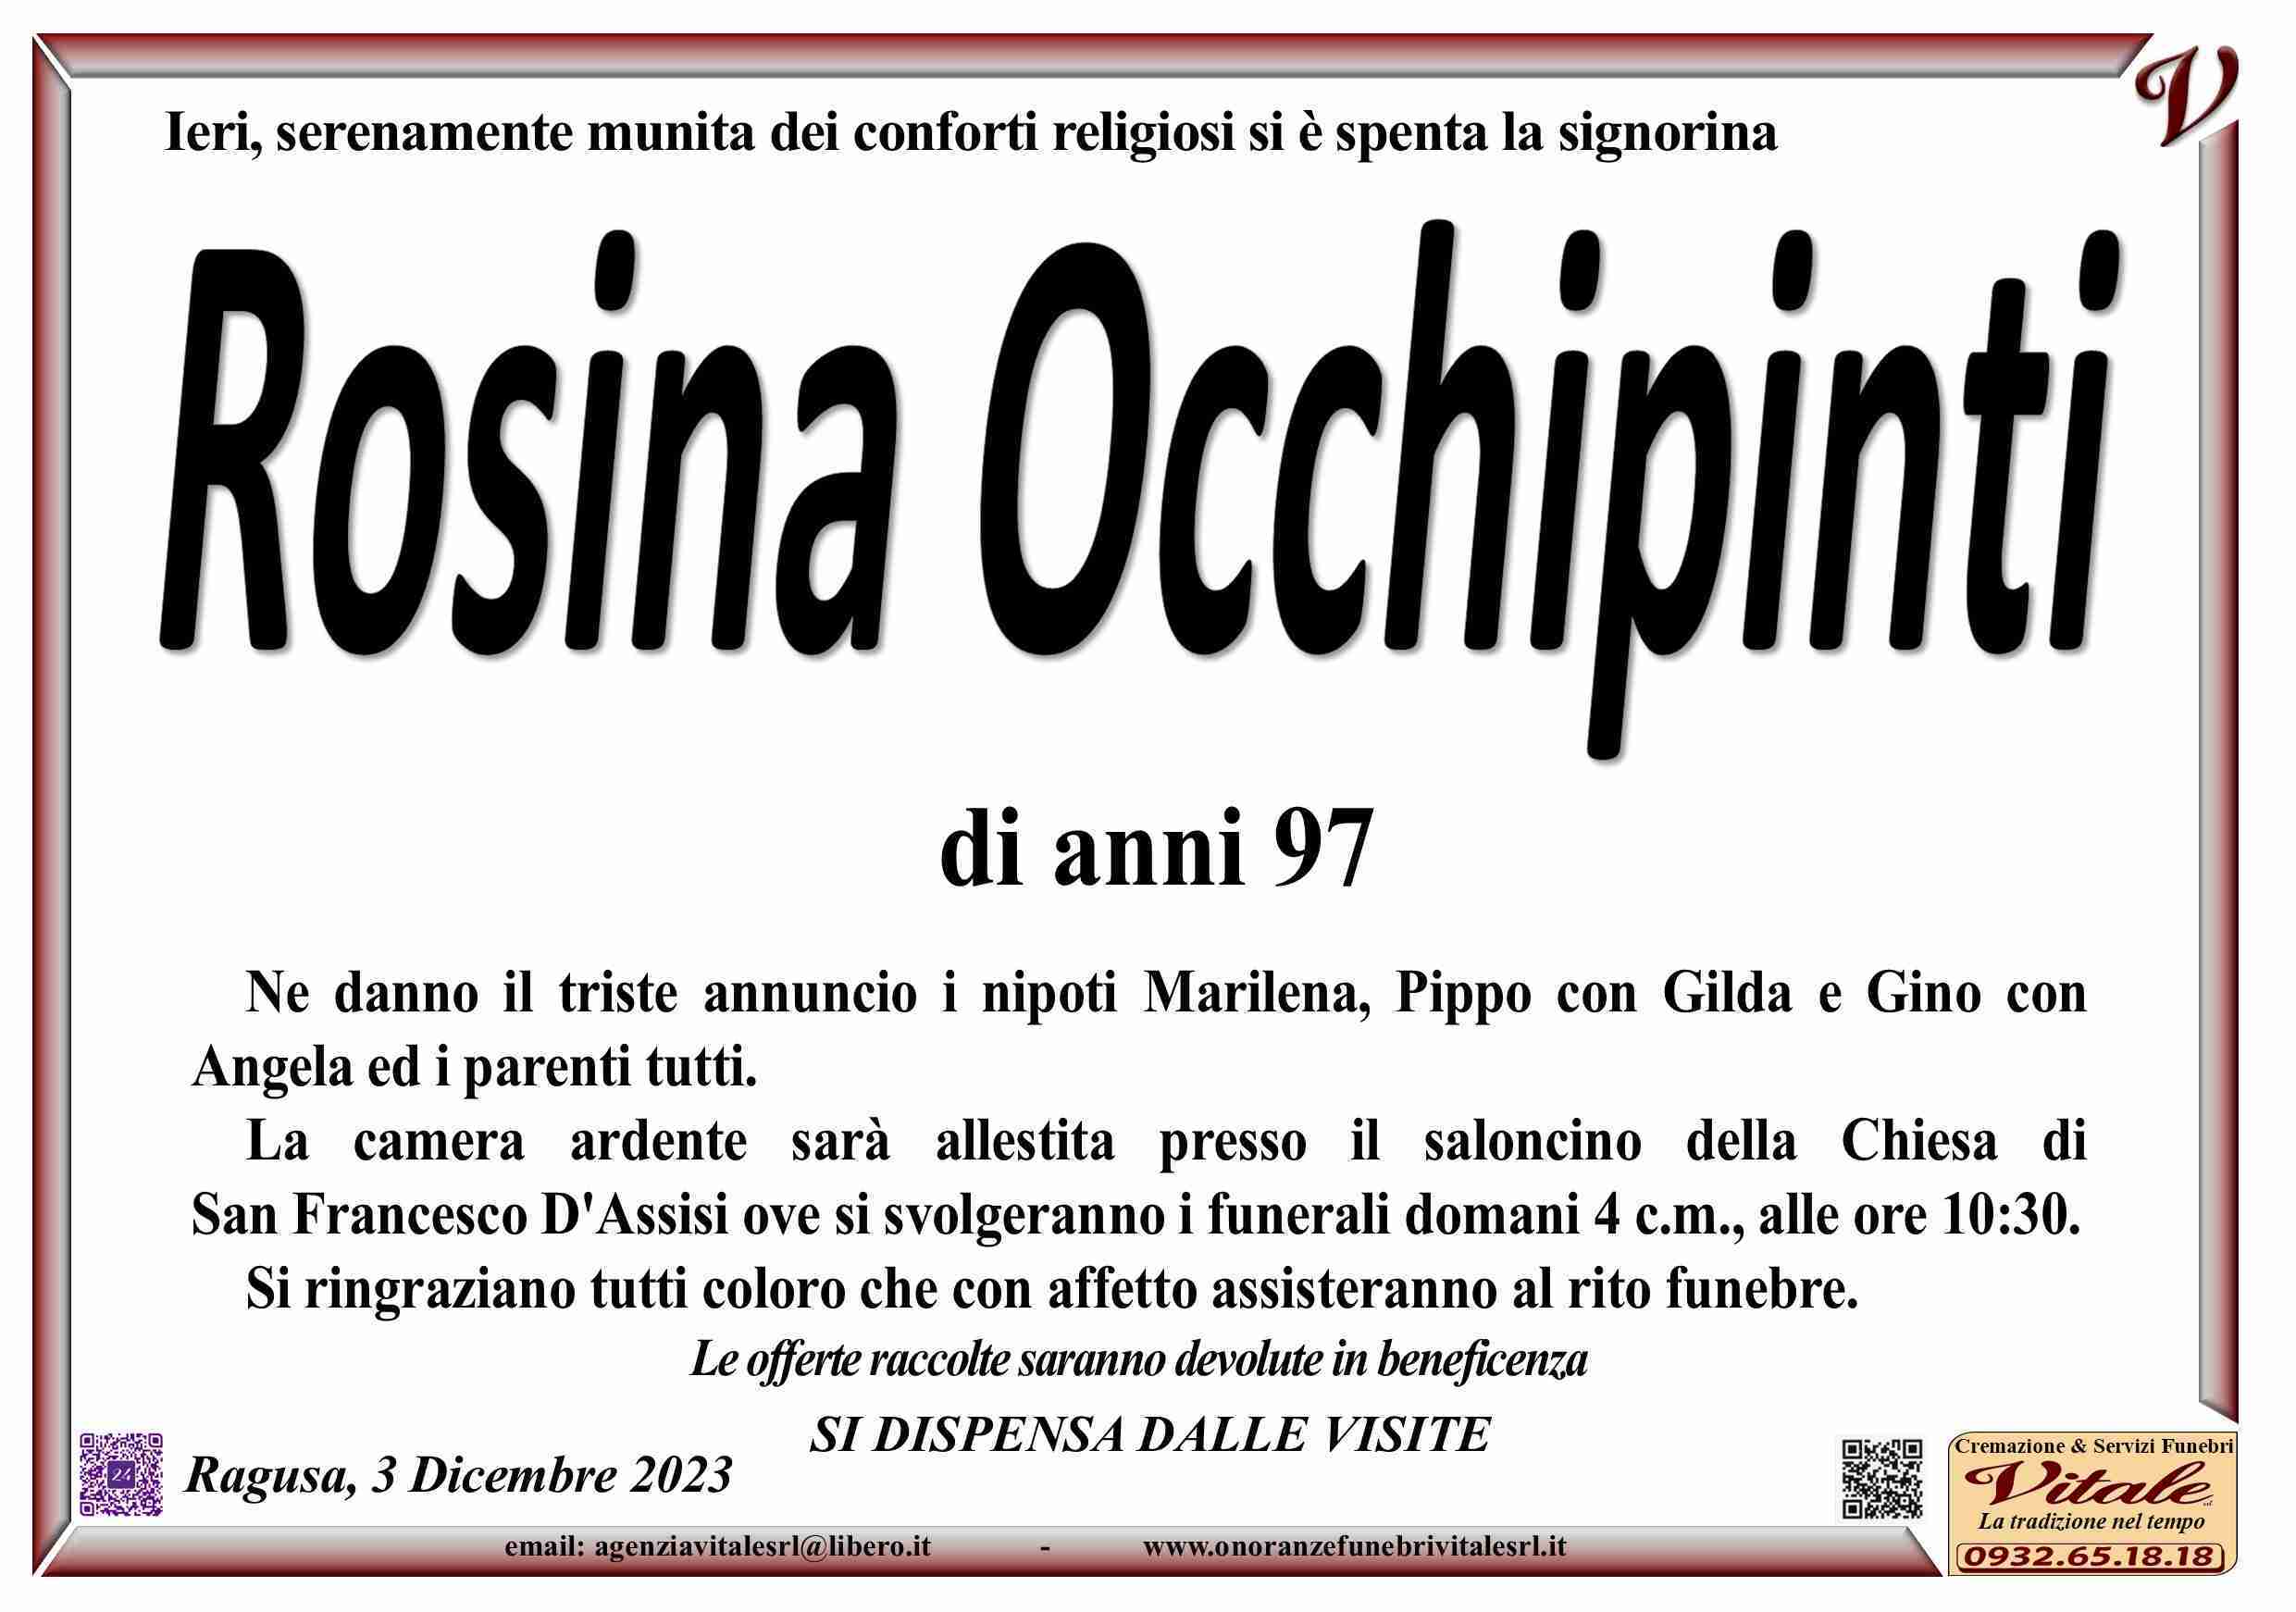 Rosina Occhipinti